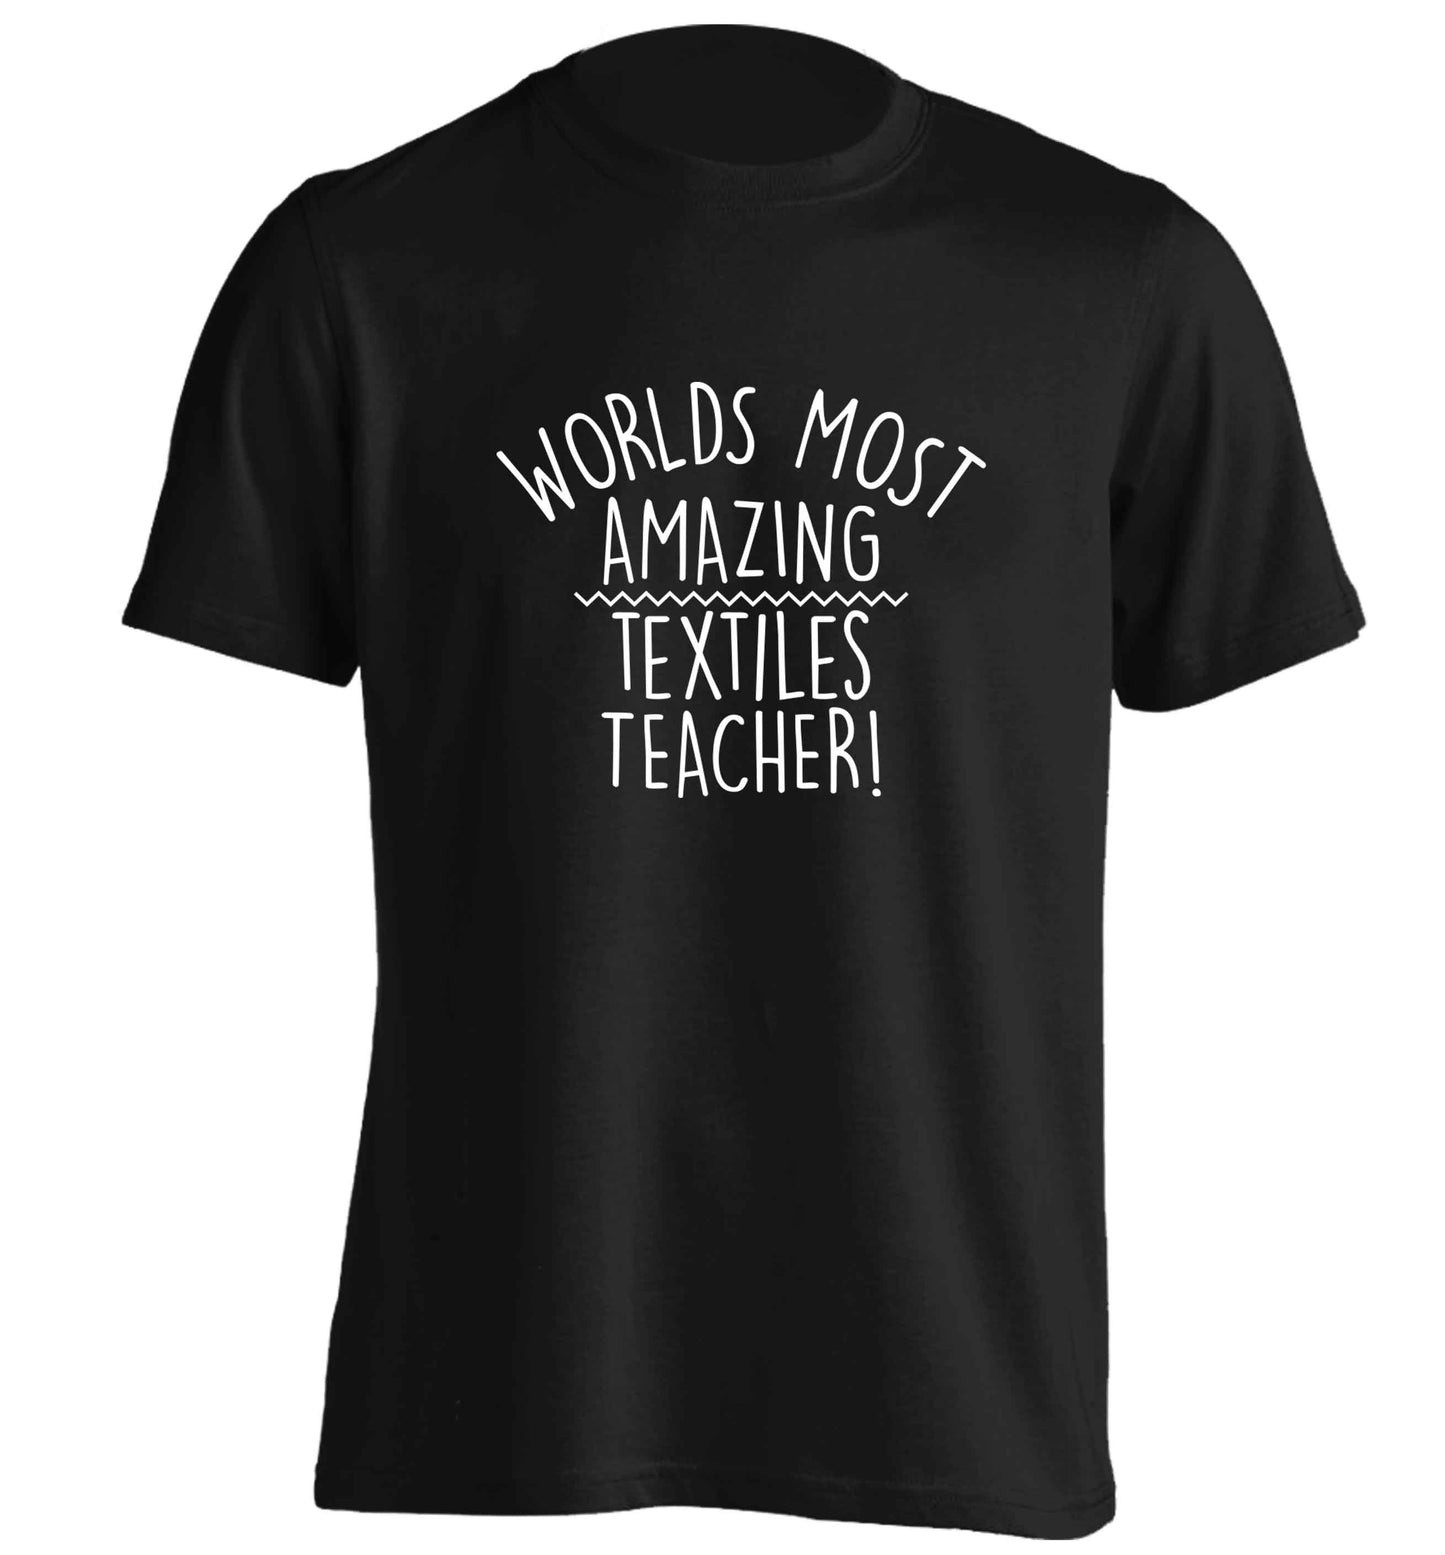 Worlds most amazing textiles teacher adults unisex black Tshirt 2XL